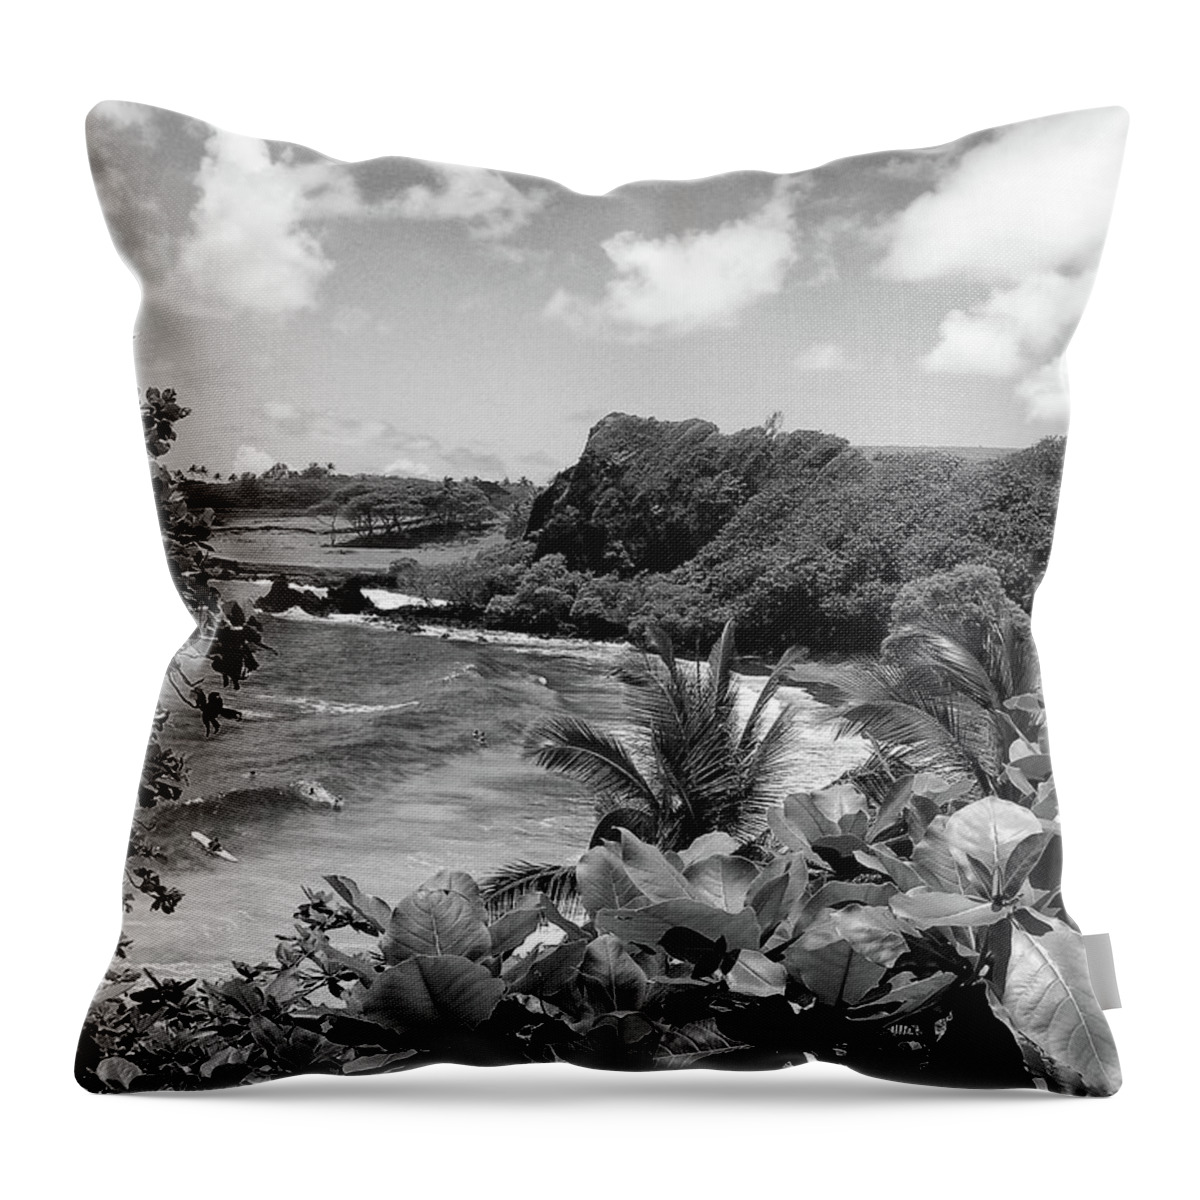 Hana Throw Pillow featuring the photograph Hamoa Beach Hana Maui Hawaii Black and White by Shawn O'Brien